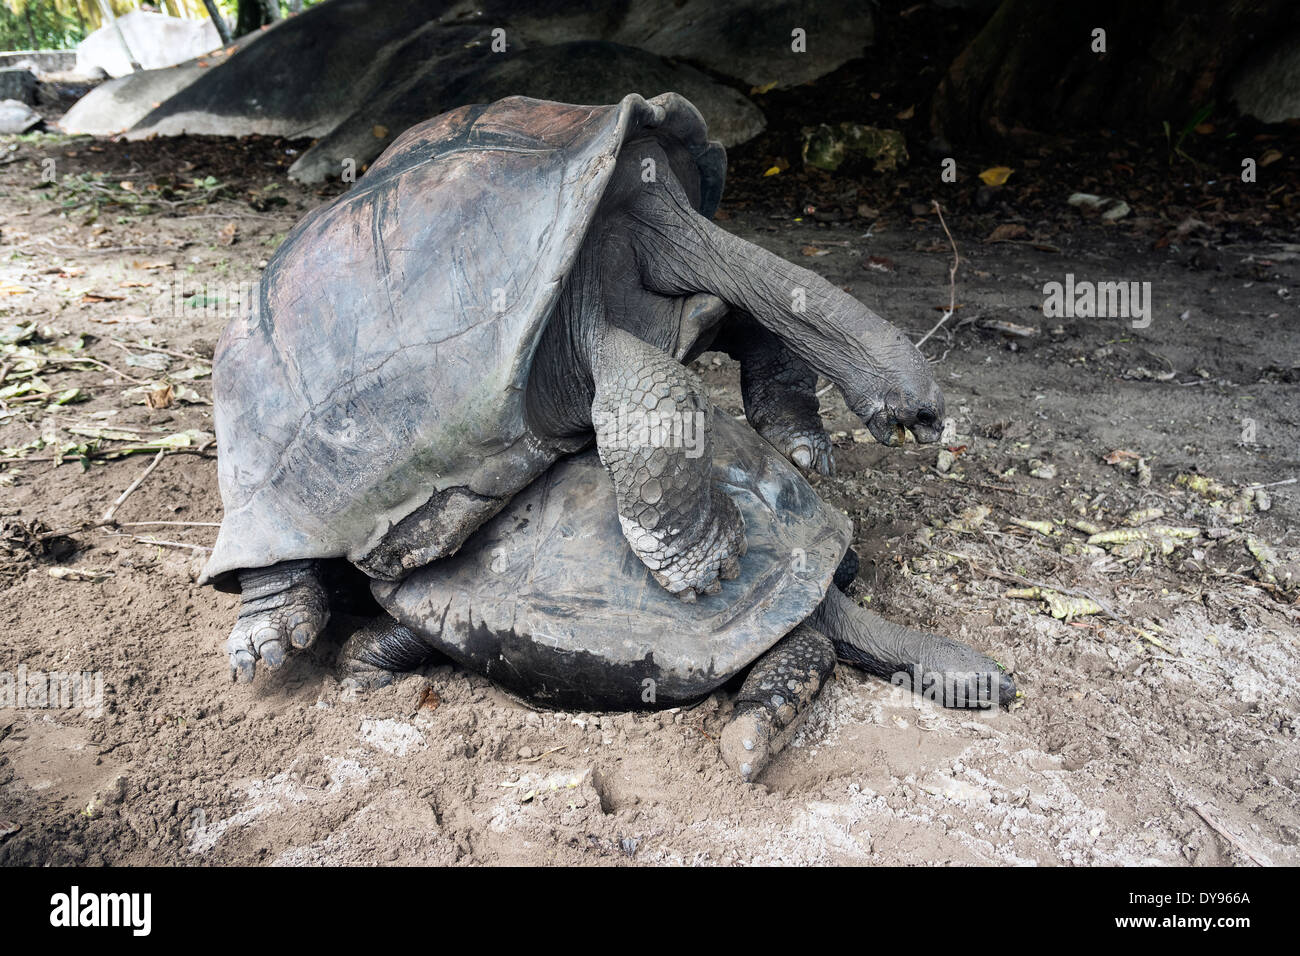 Seychelles, Praslin, Seychelles giant tortoises (Dipsochelys hololissa) mating Stock Photo